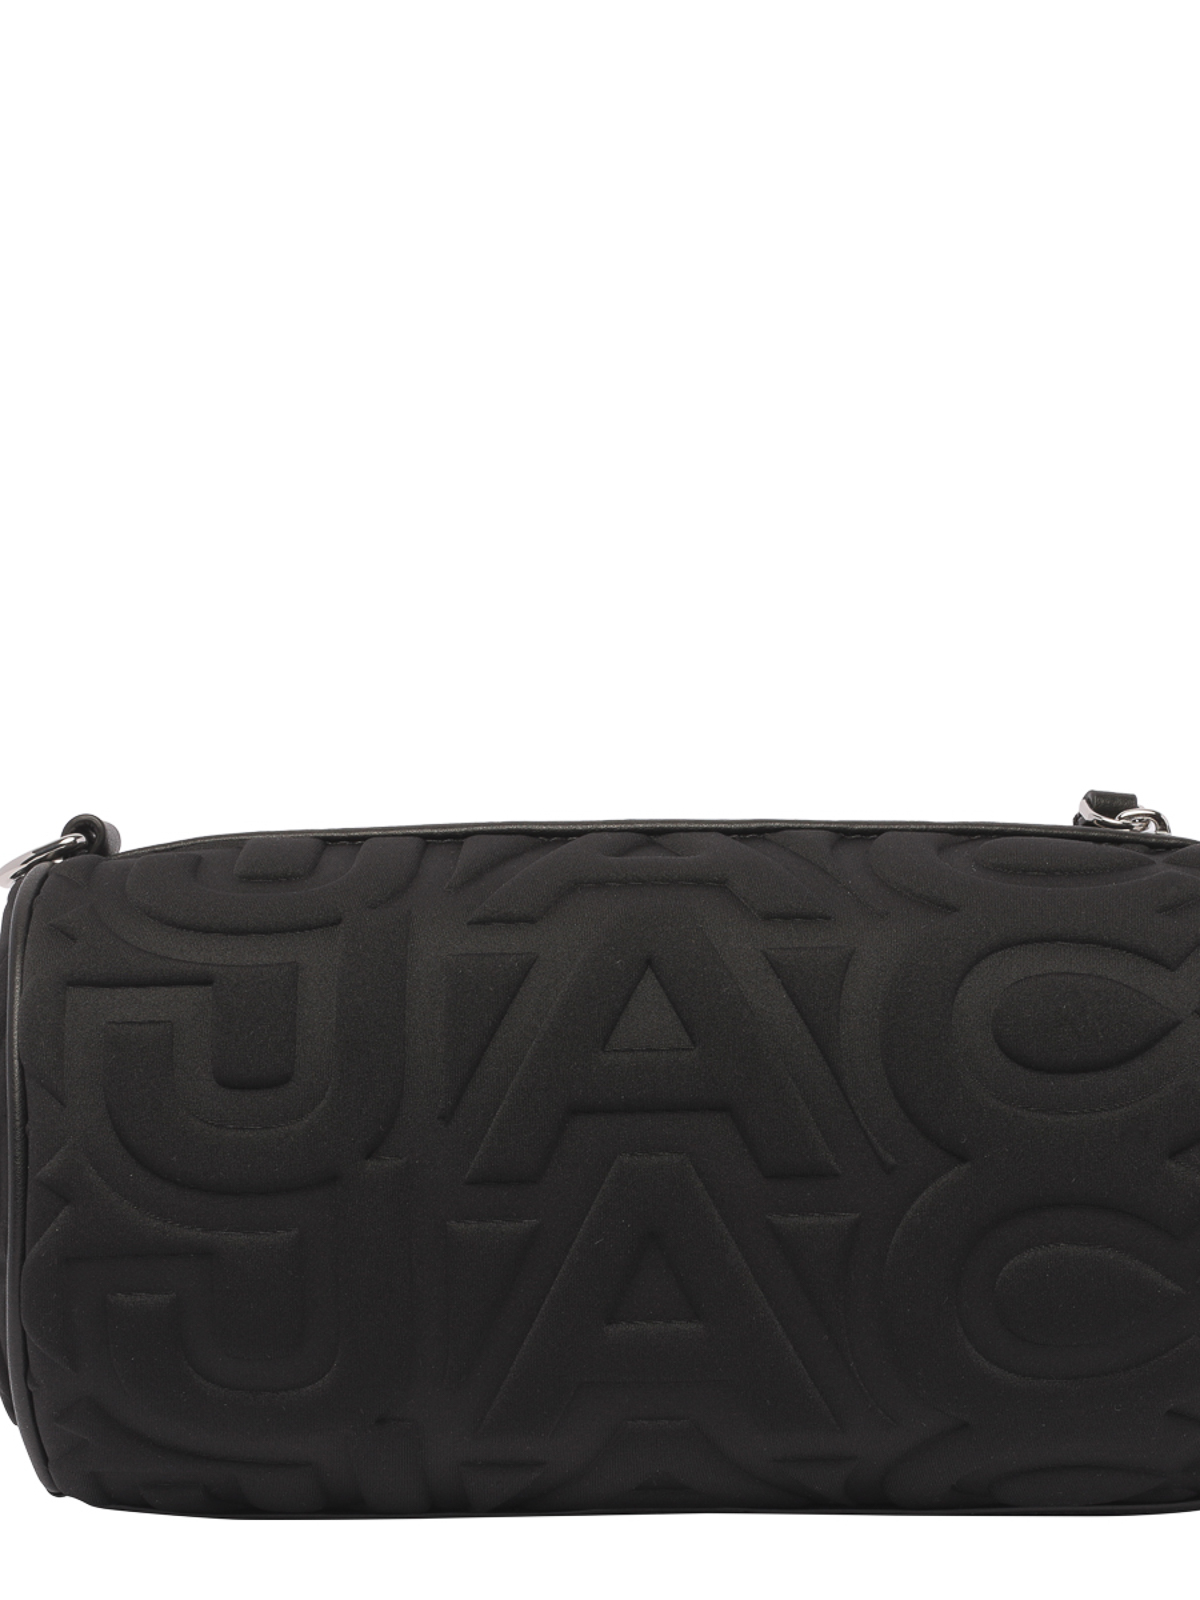 Marc Jacobs The Monogram Neoprene Black Duffle Bag